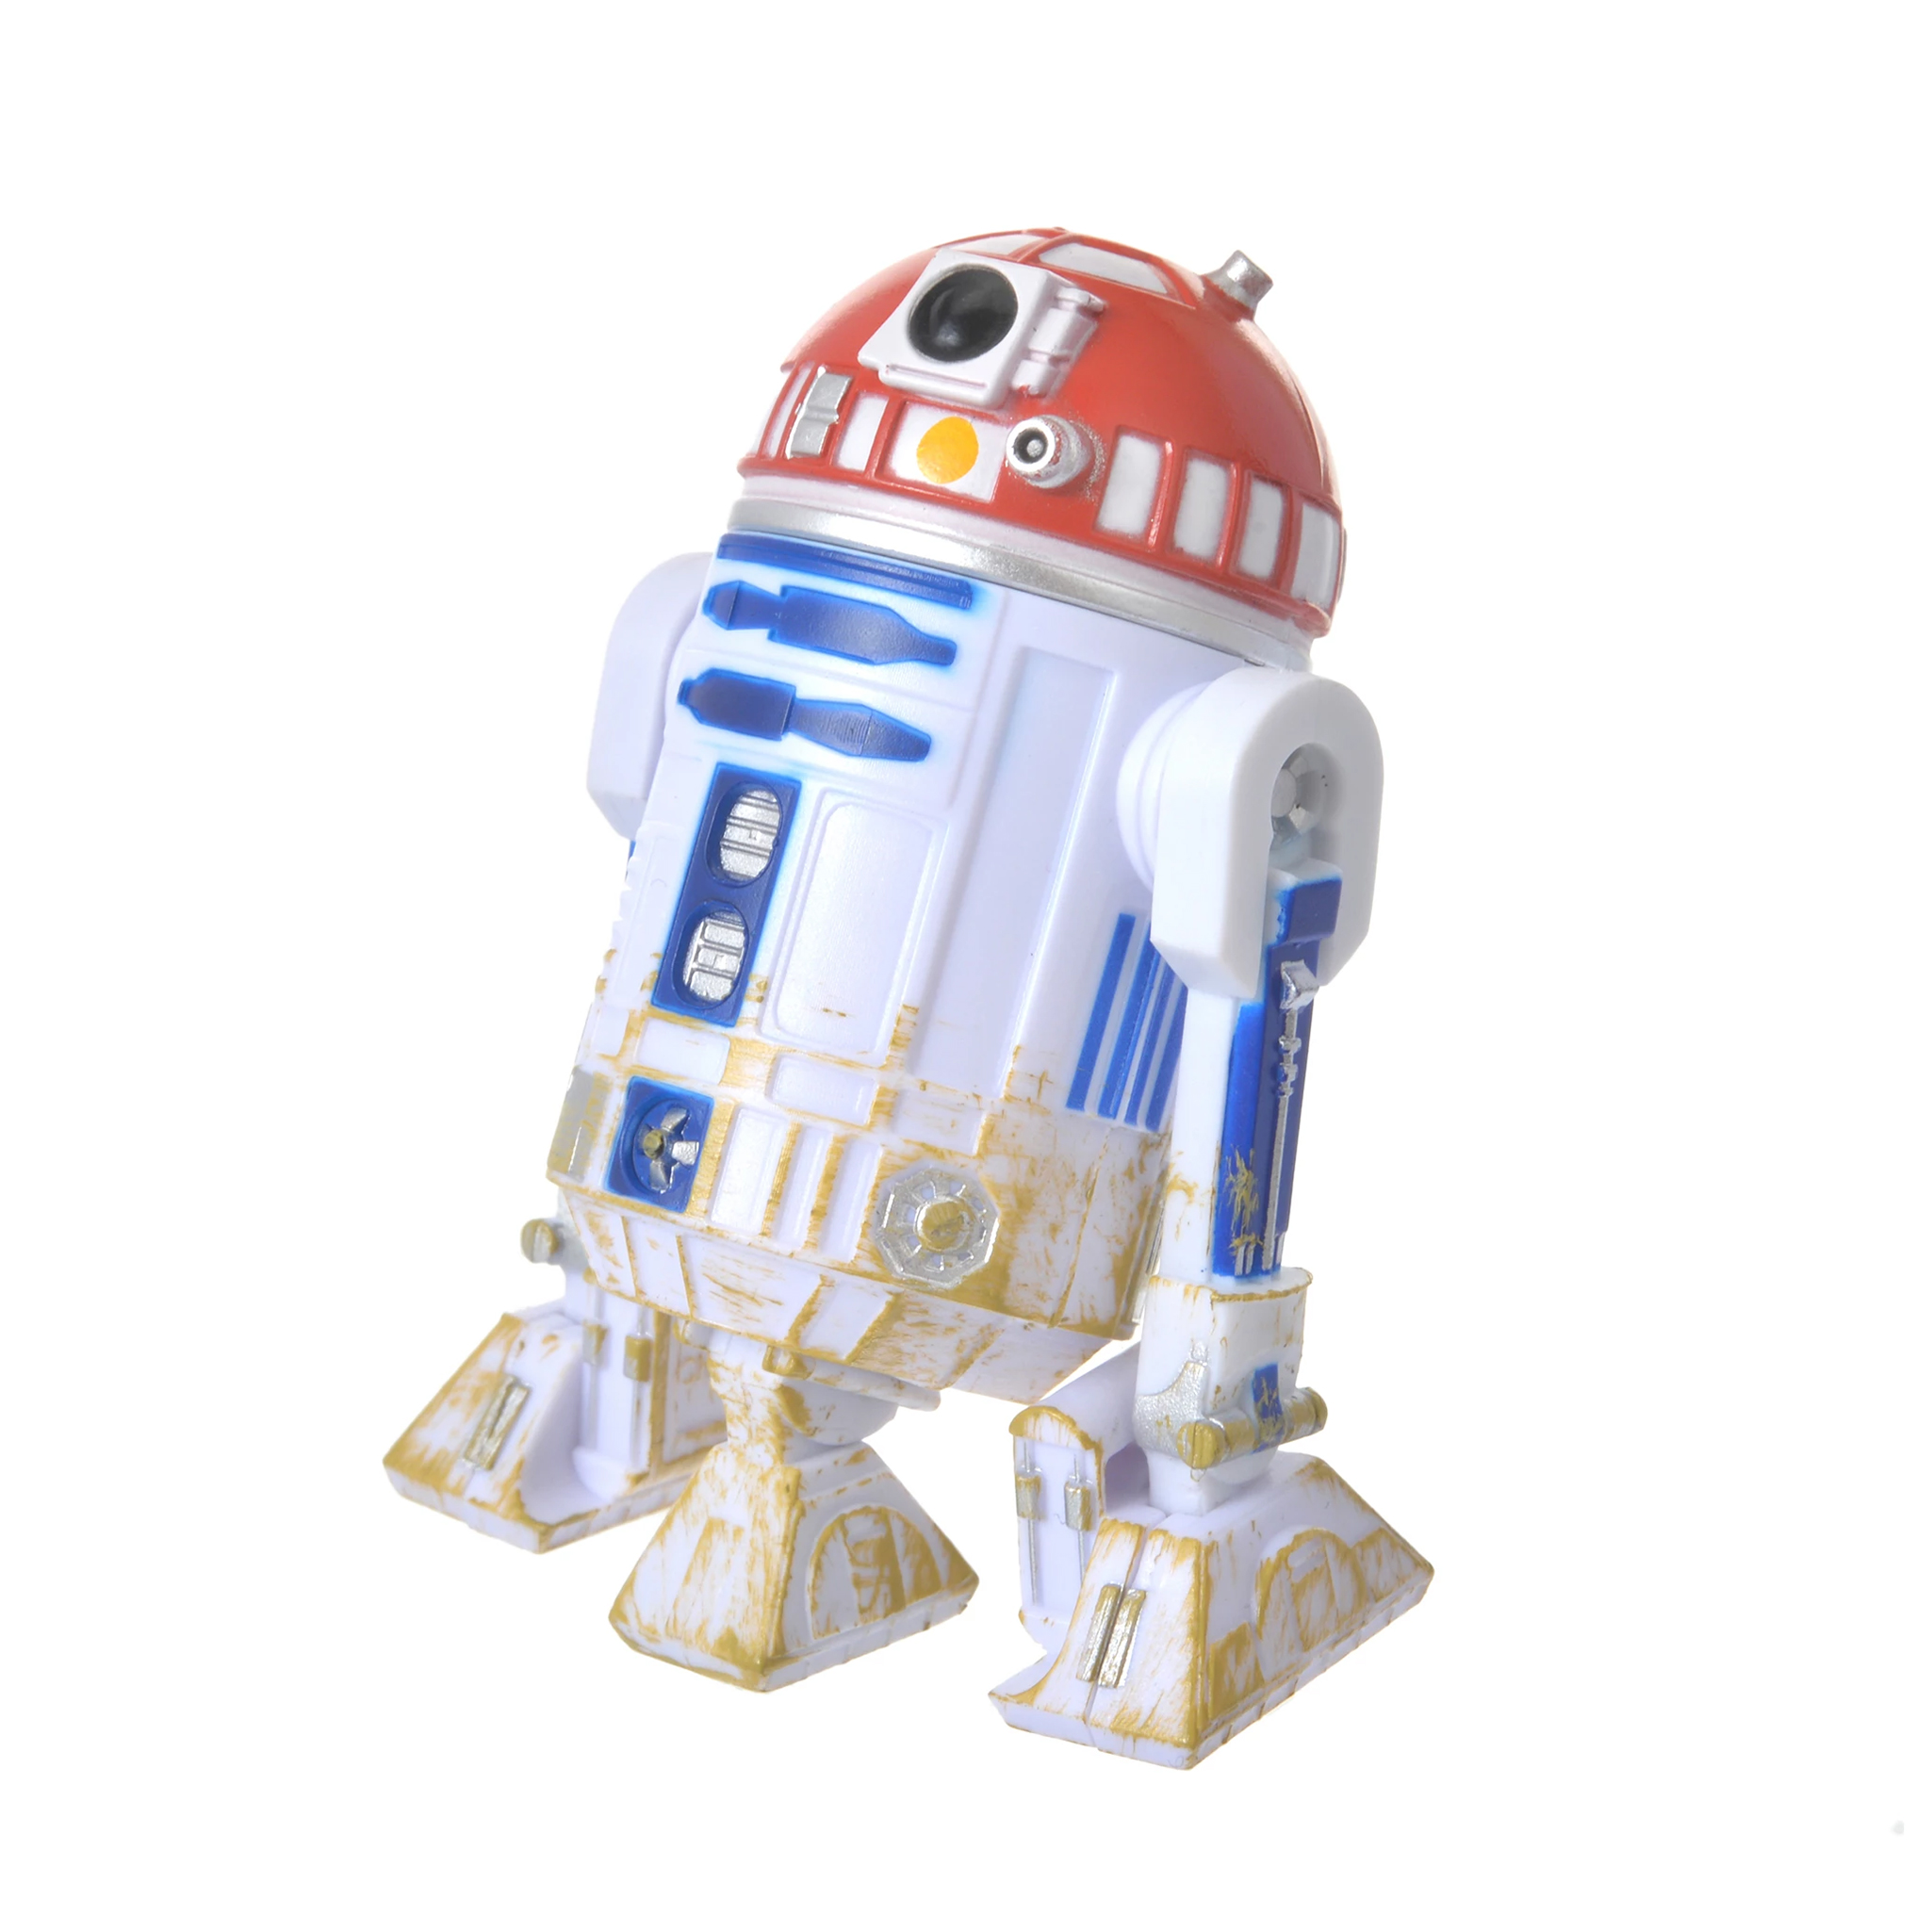 Revealed - New Disney Exclusive Droid Factory Obi-Wan Kenobi Series Set